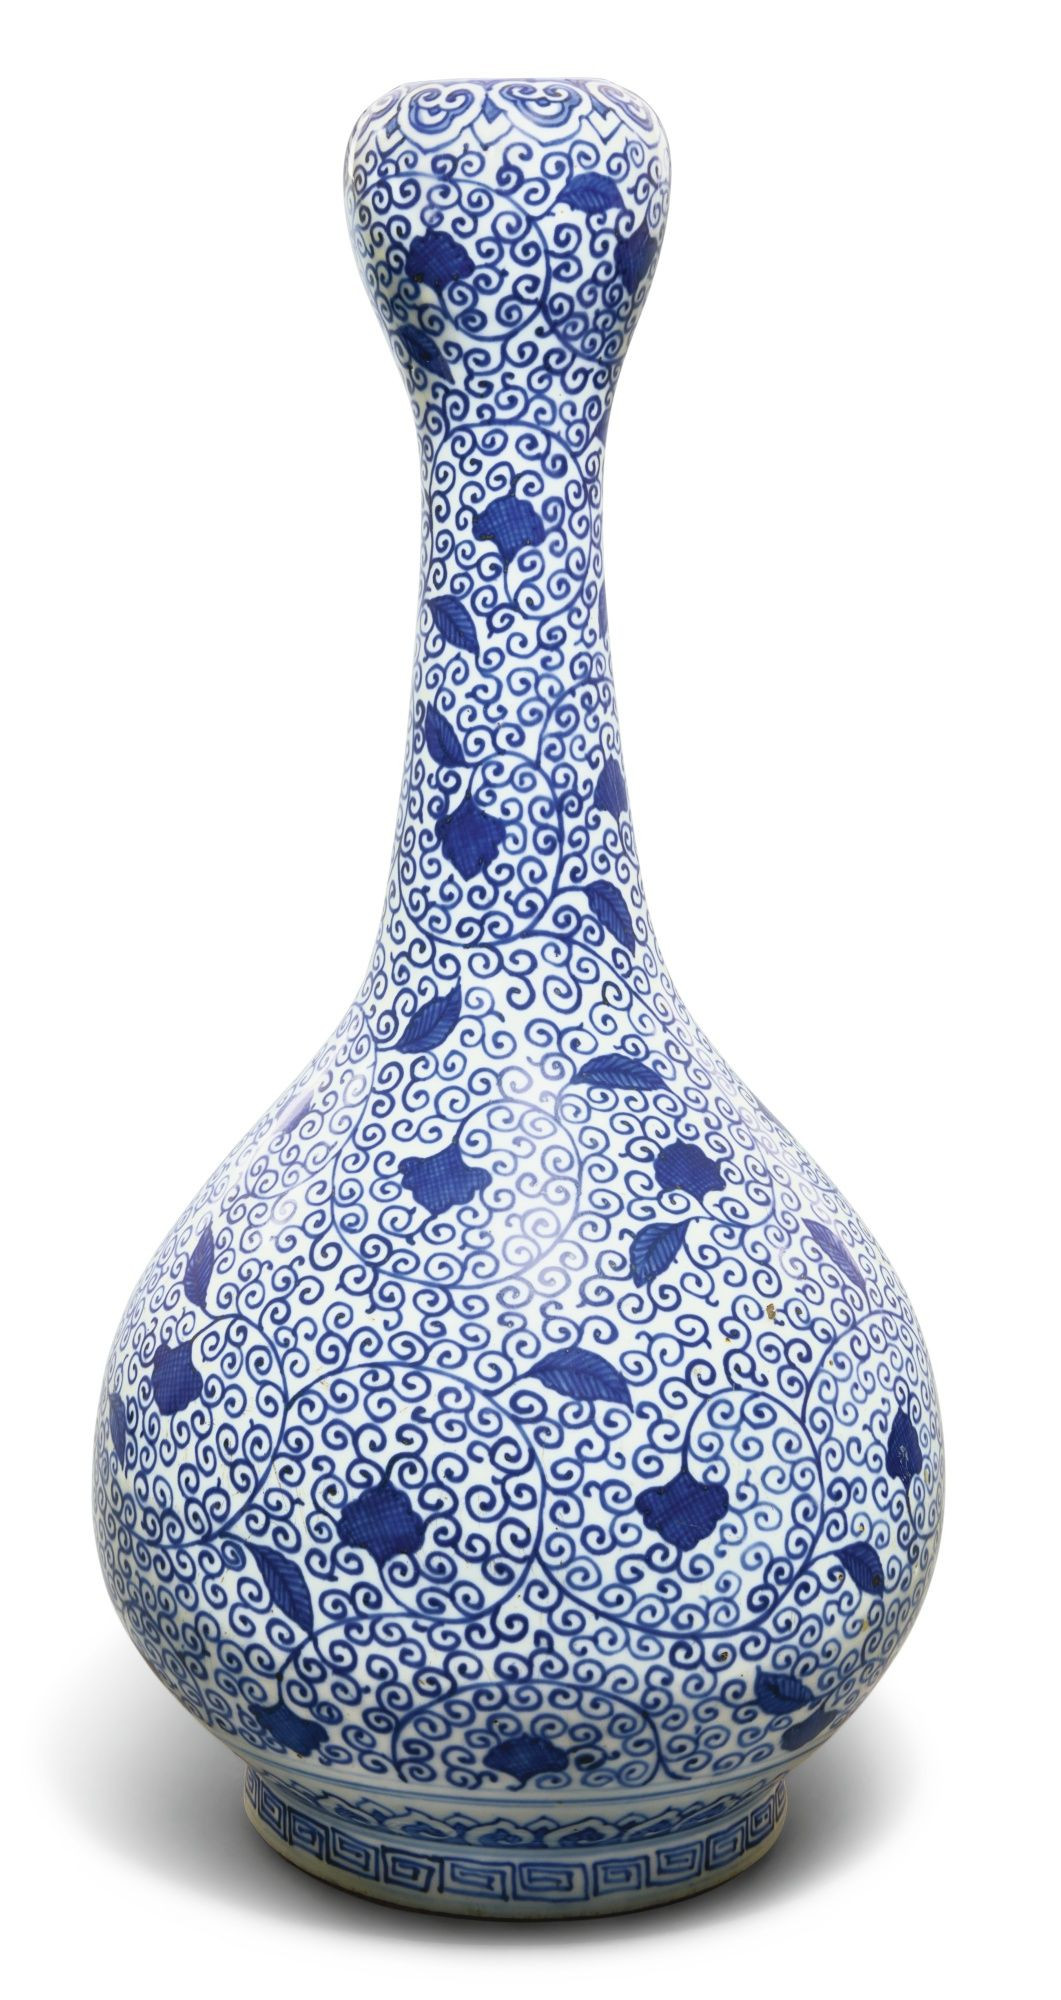 10 Lovable White Ceramic Owl Vase 2024 free download white ceramic owl vase of a blue and white garlic mouth bottle vase 17th century china in vase